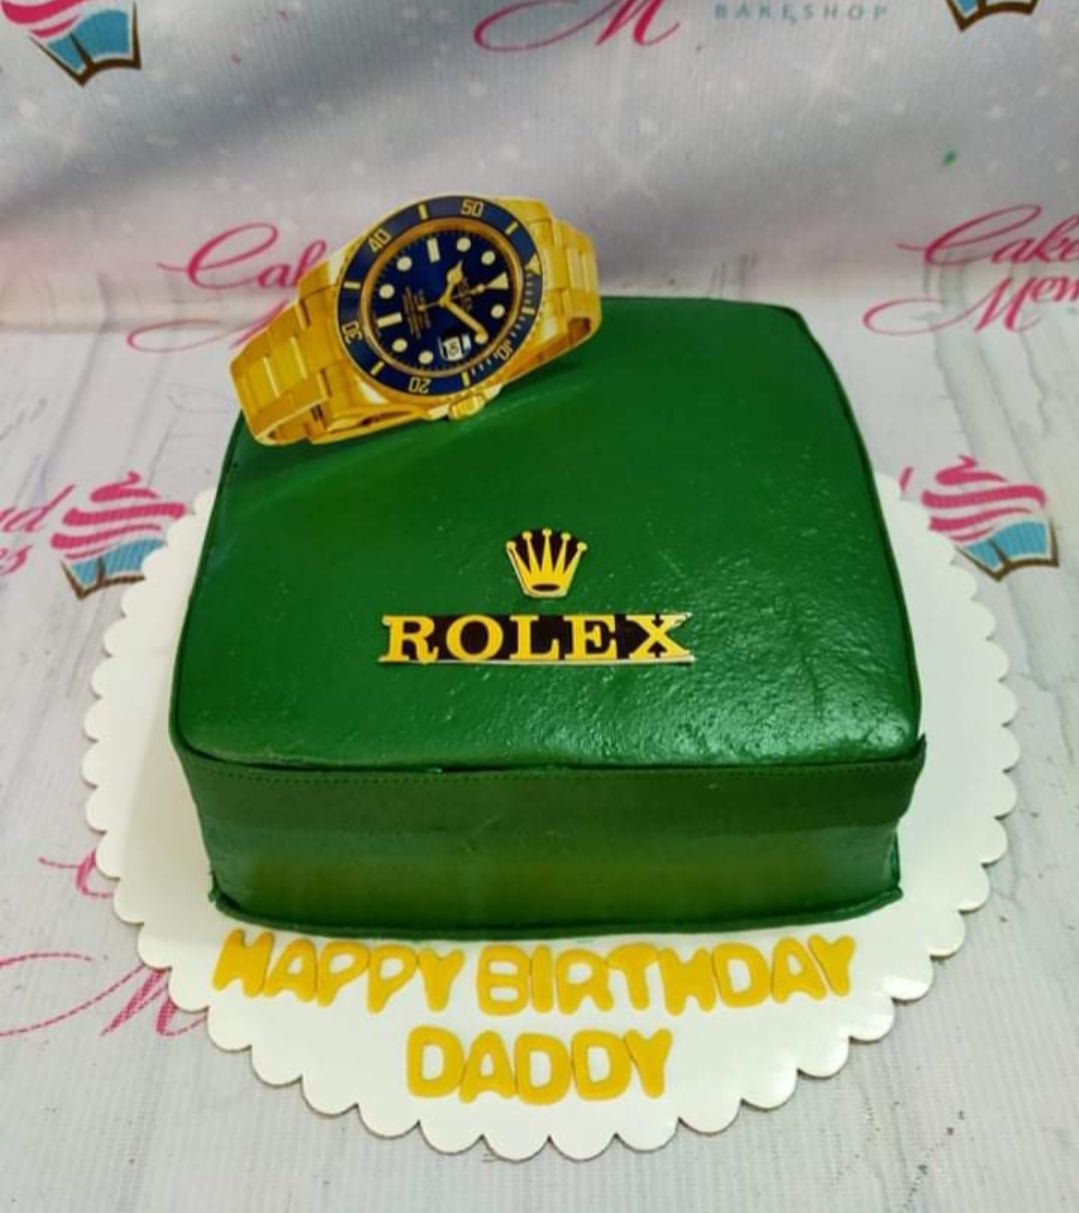 Rolex Watch Cake 3 - CHUCAKES